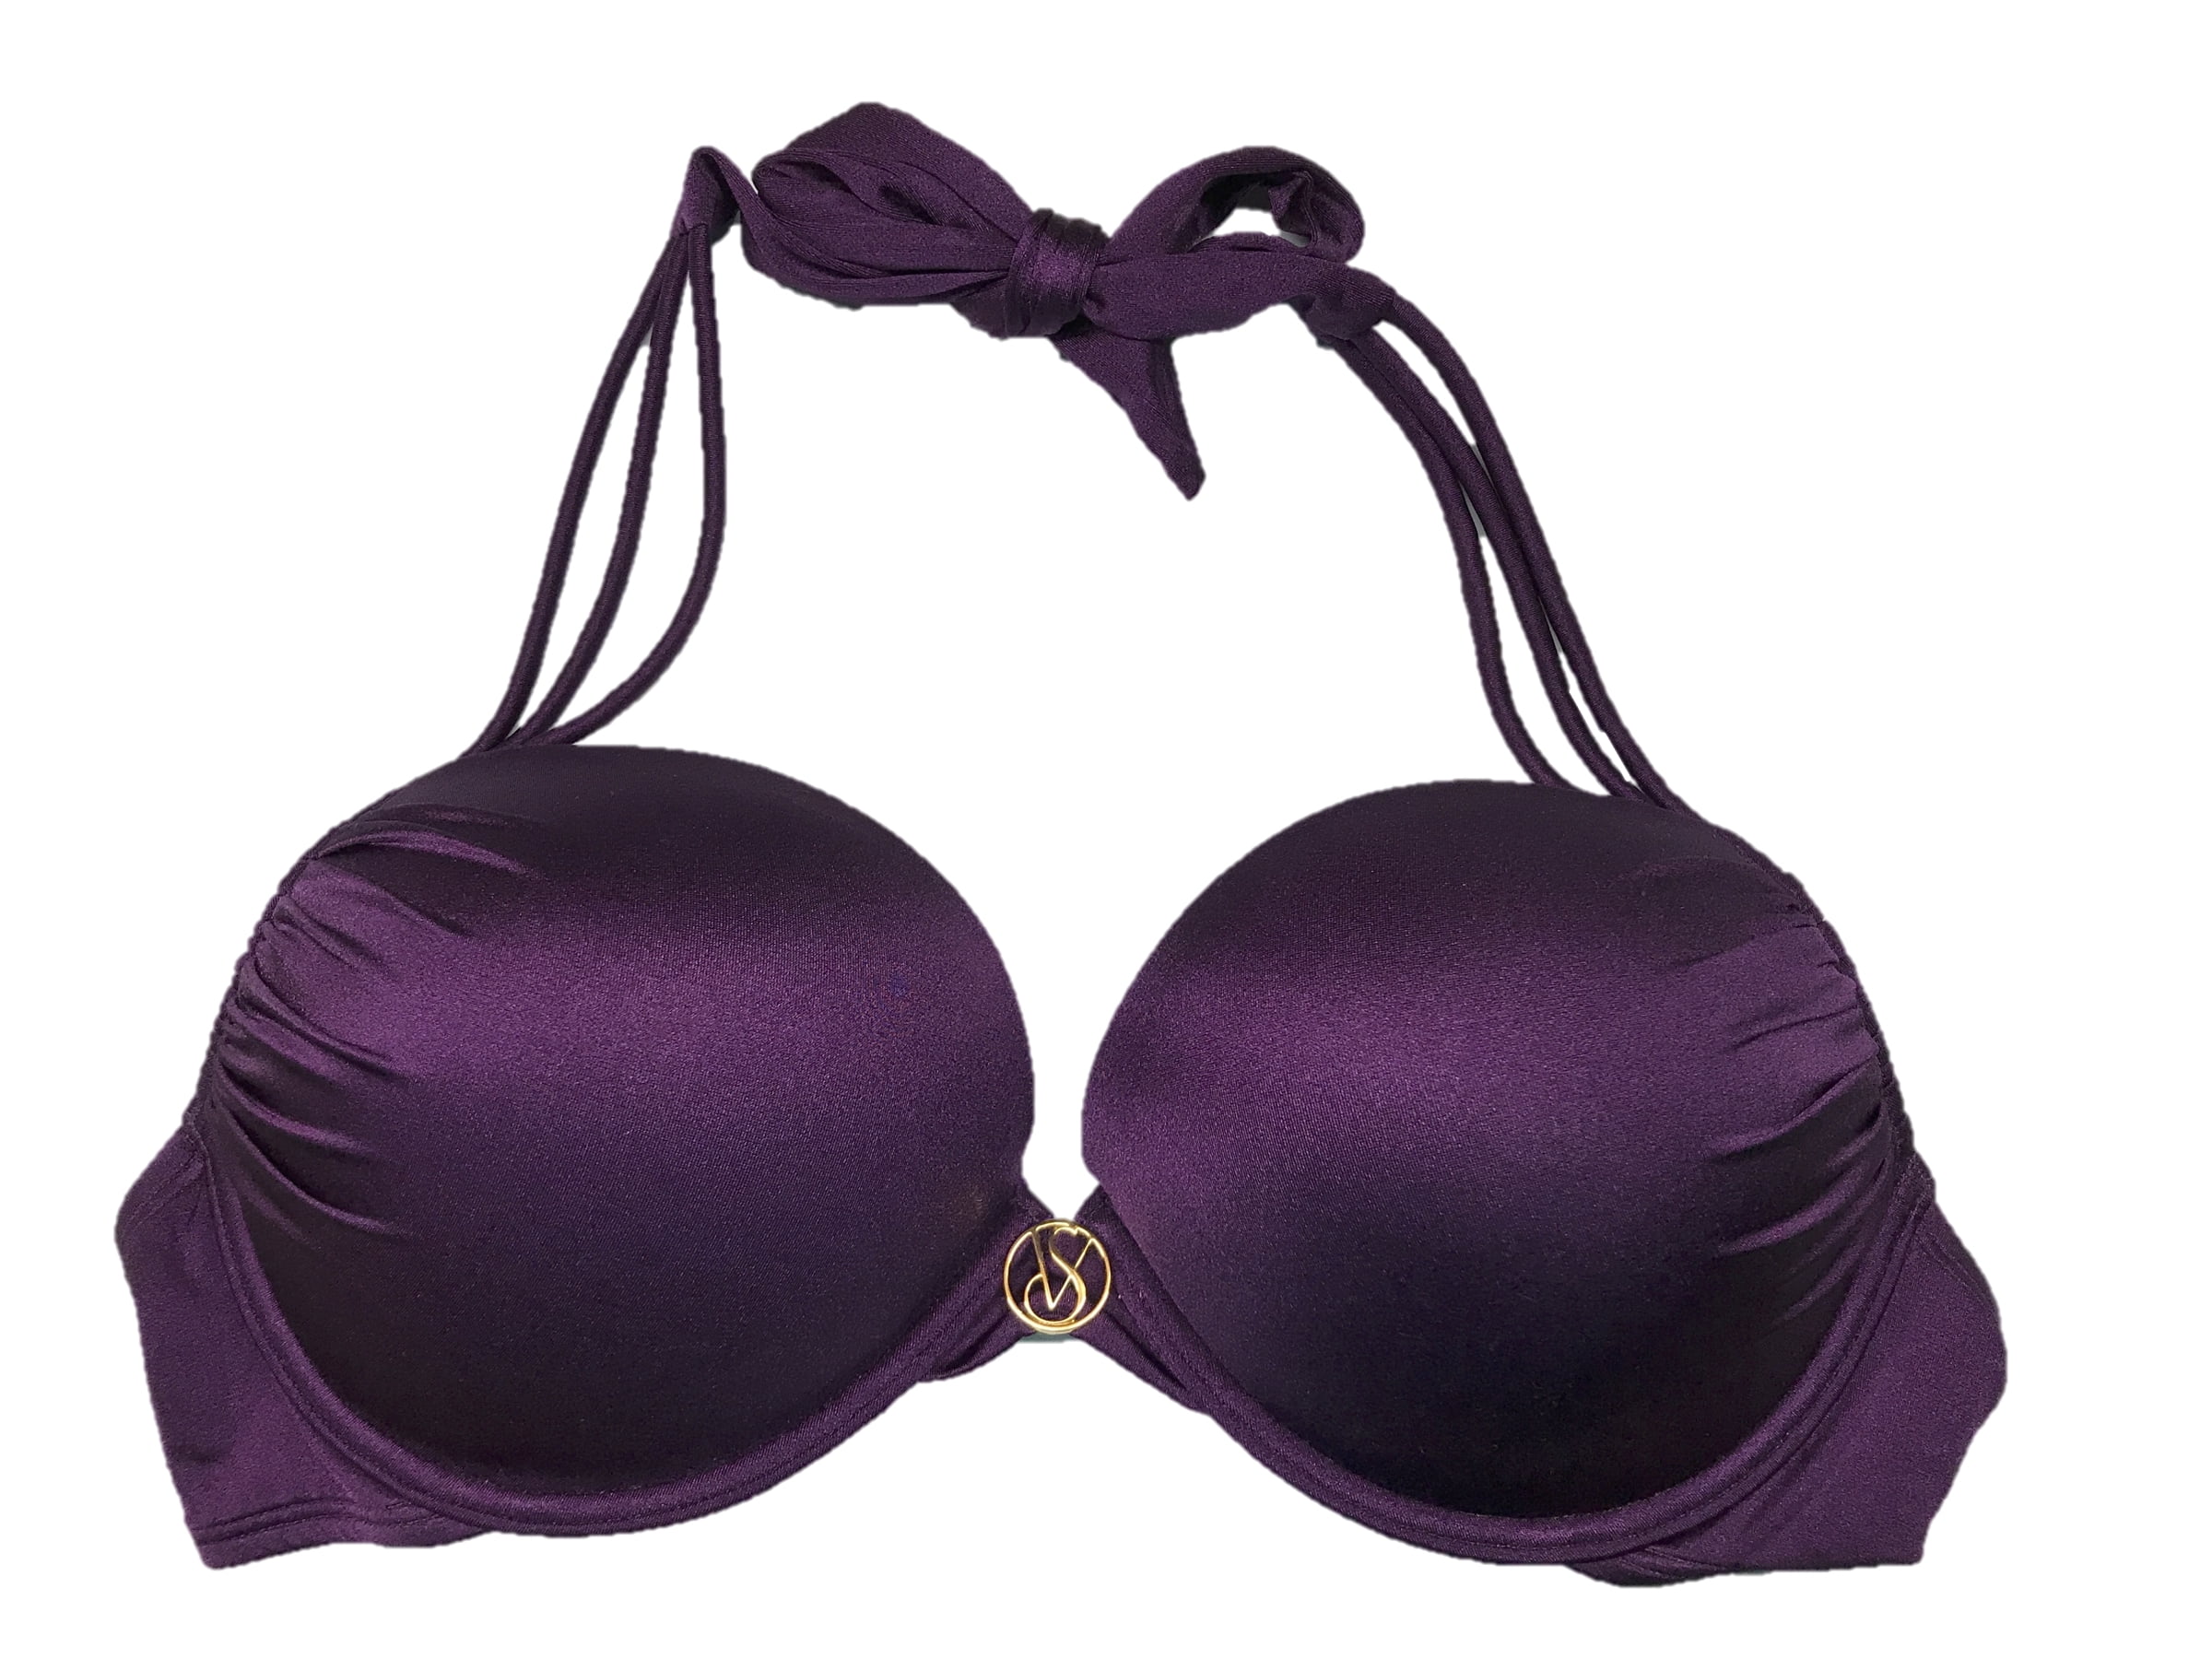 Victoria's Secret Victoria secret bombshell bikini top 34A Size undefined -  $10 - From Hayley